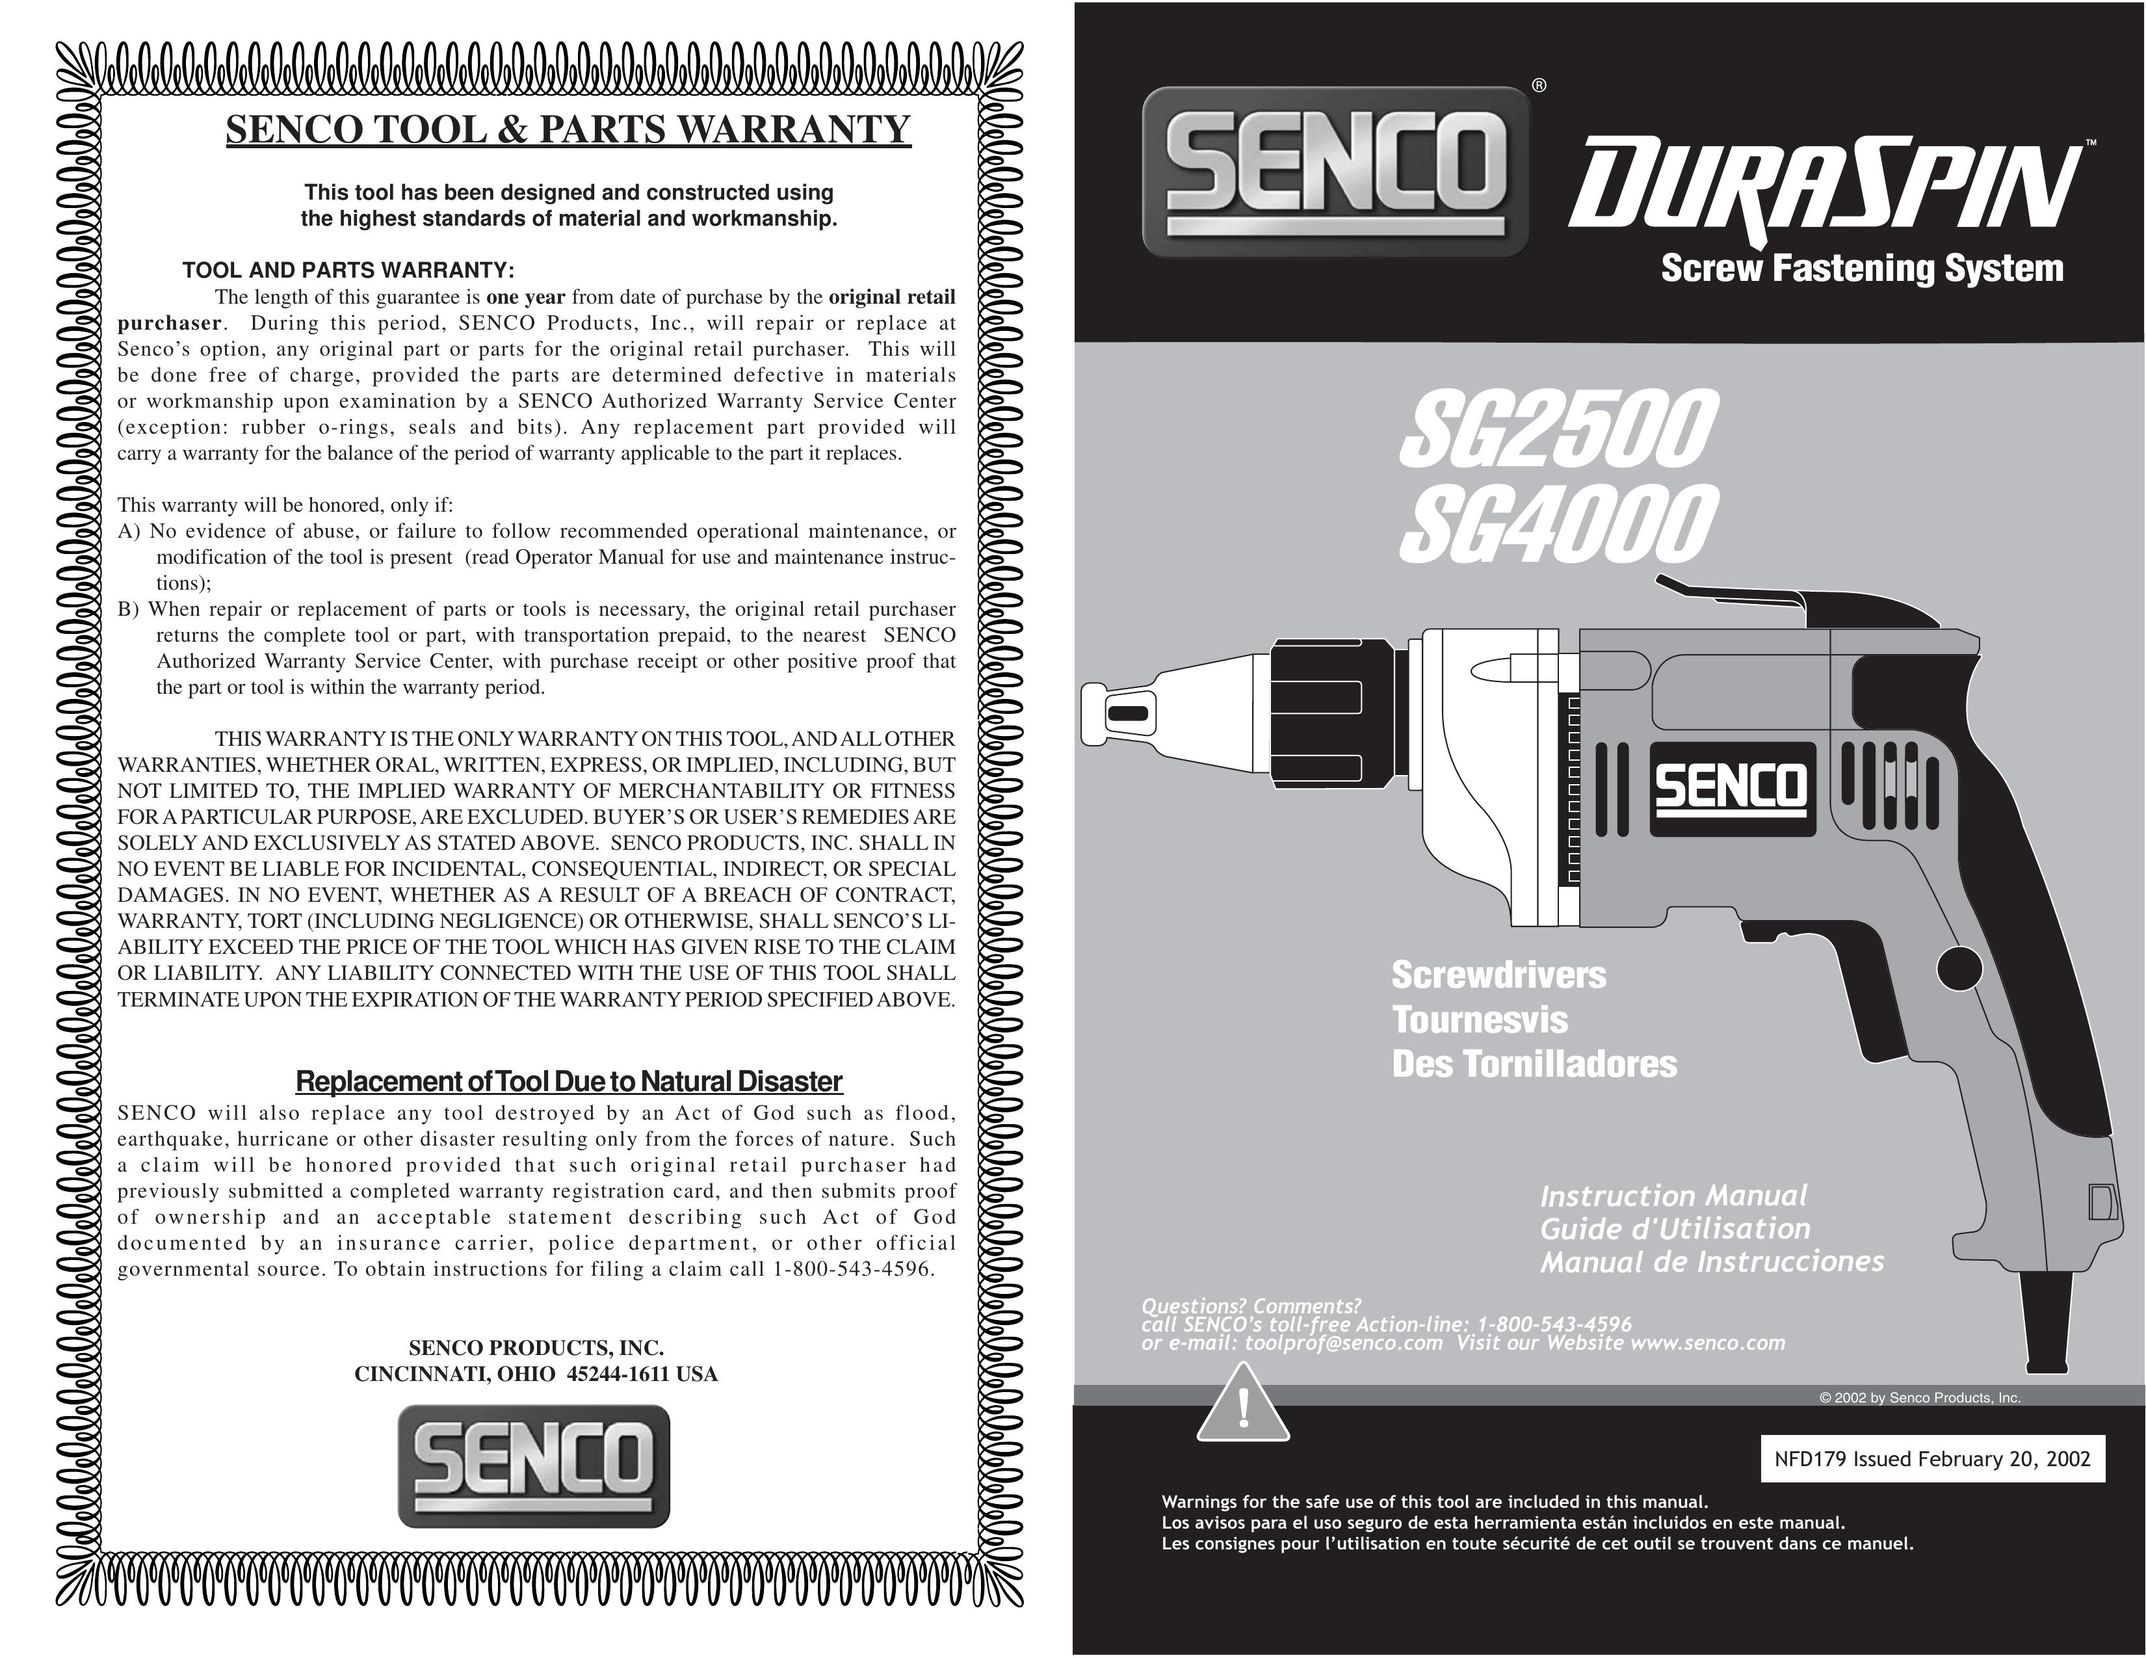 Senco SG2500 Power Screwdriver User Manual